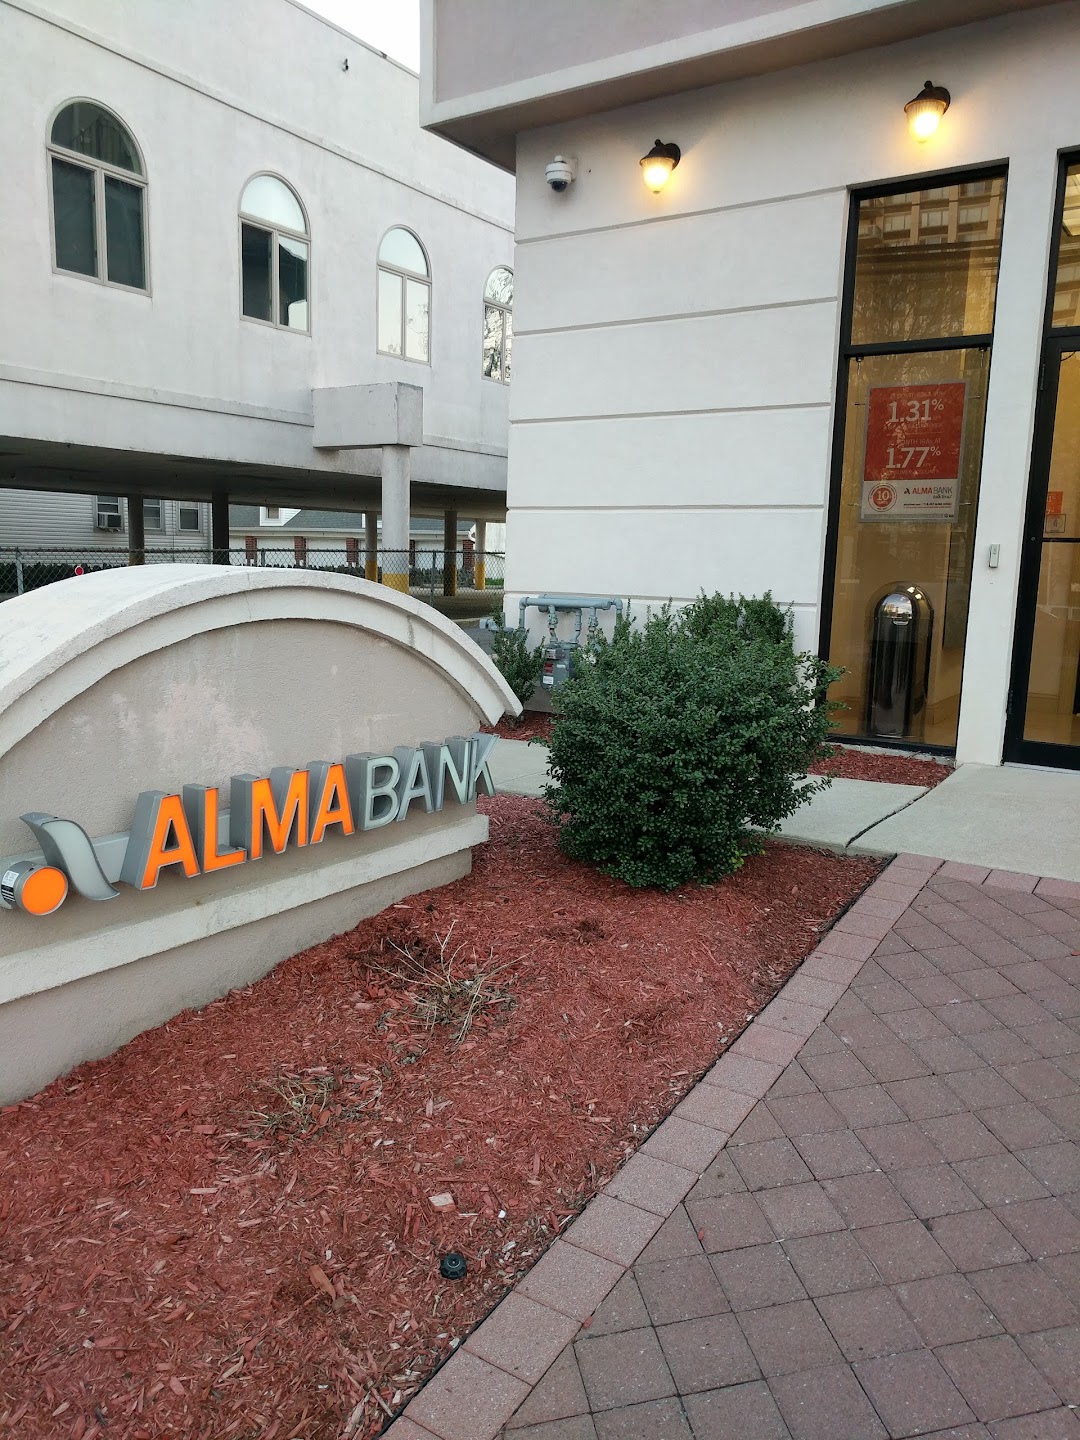 Alma Bank